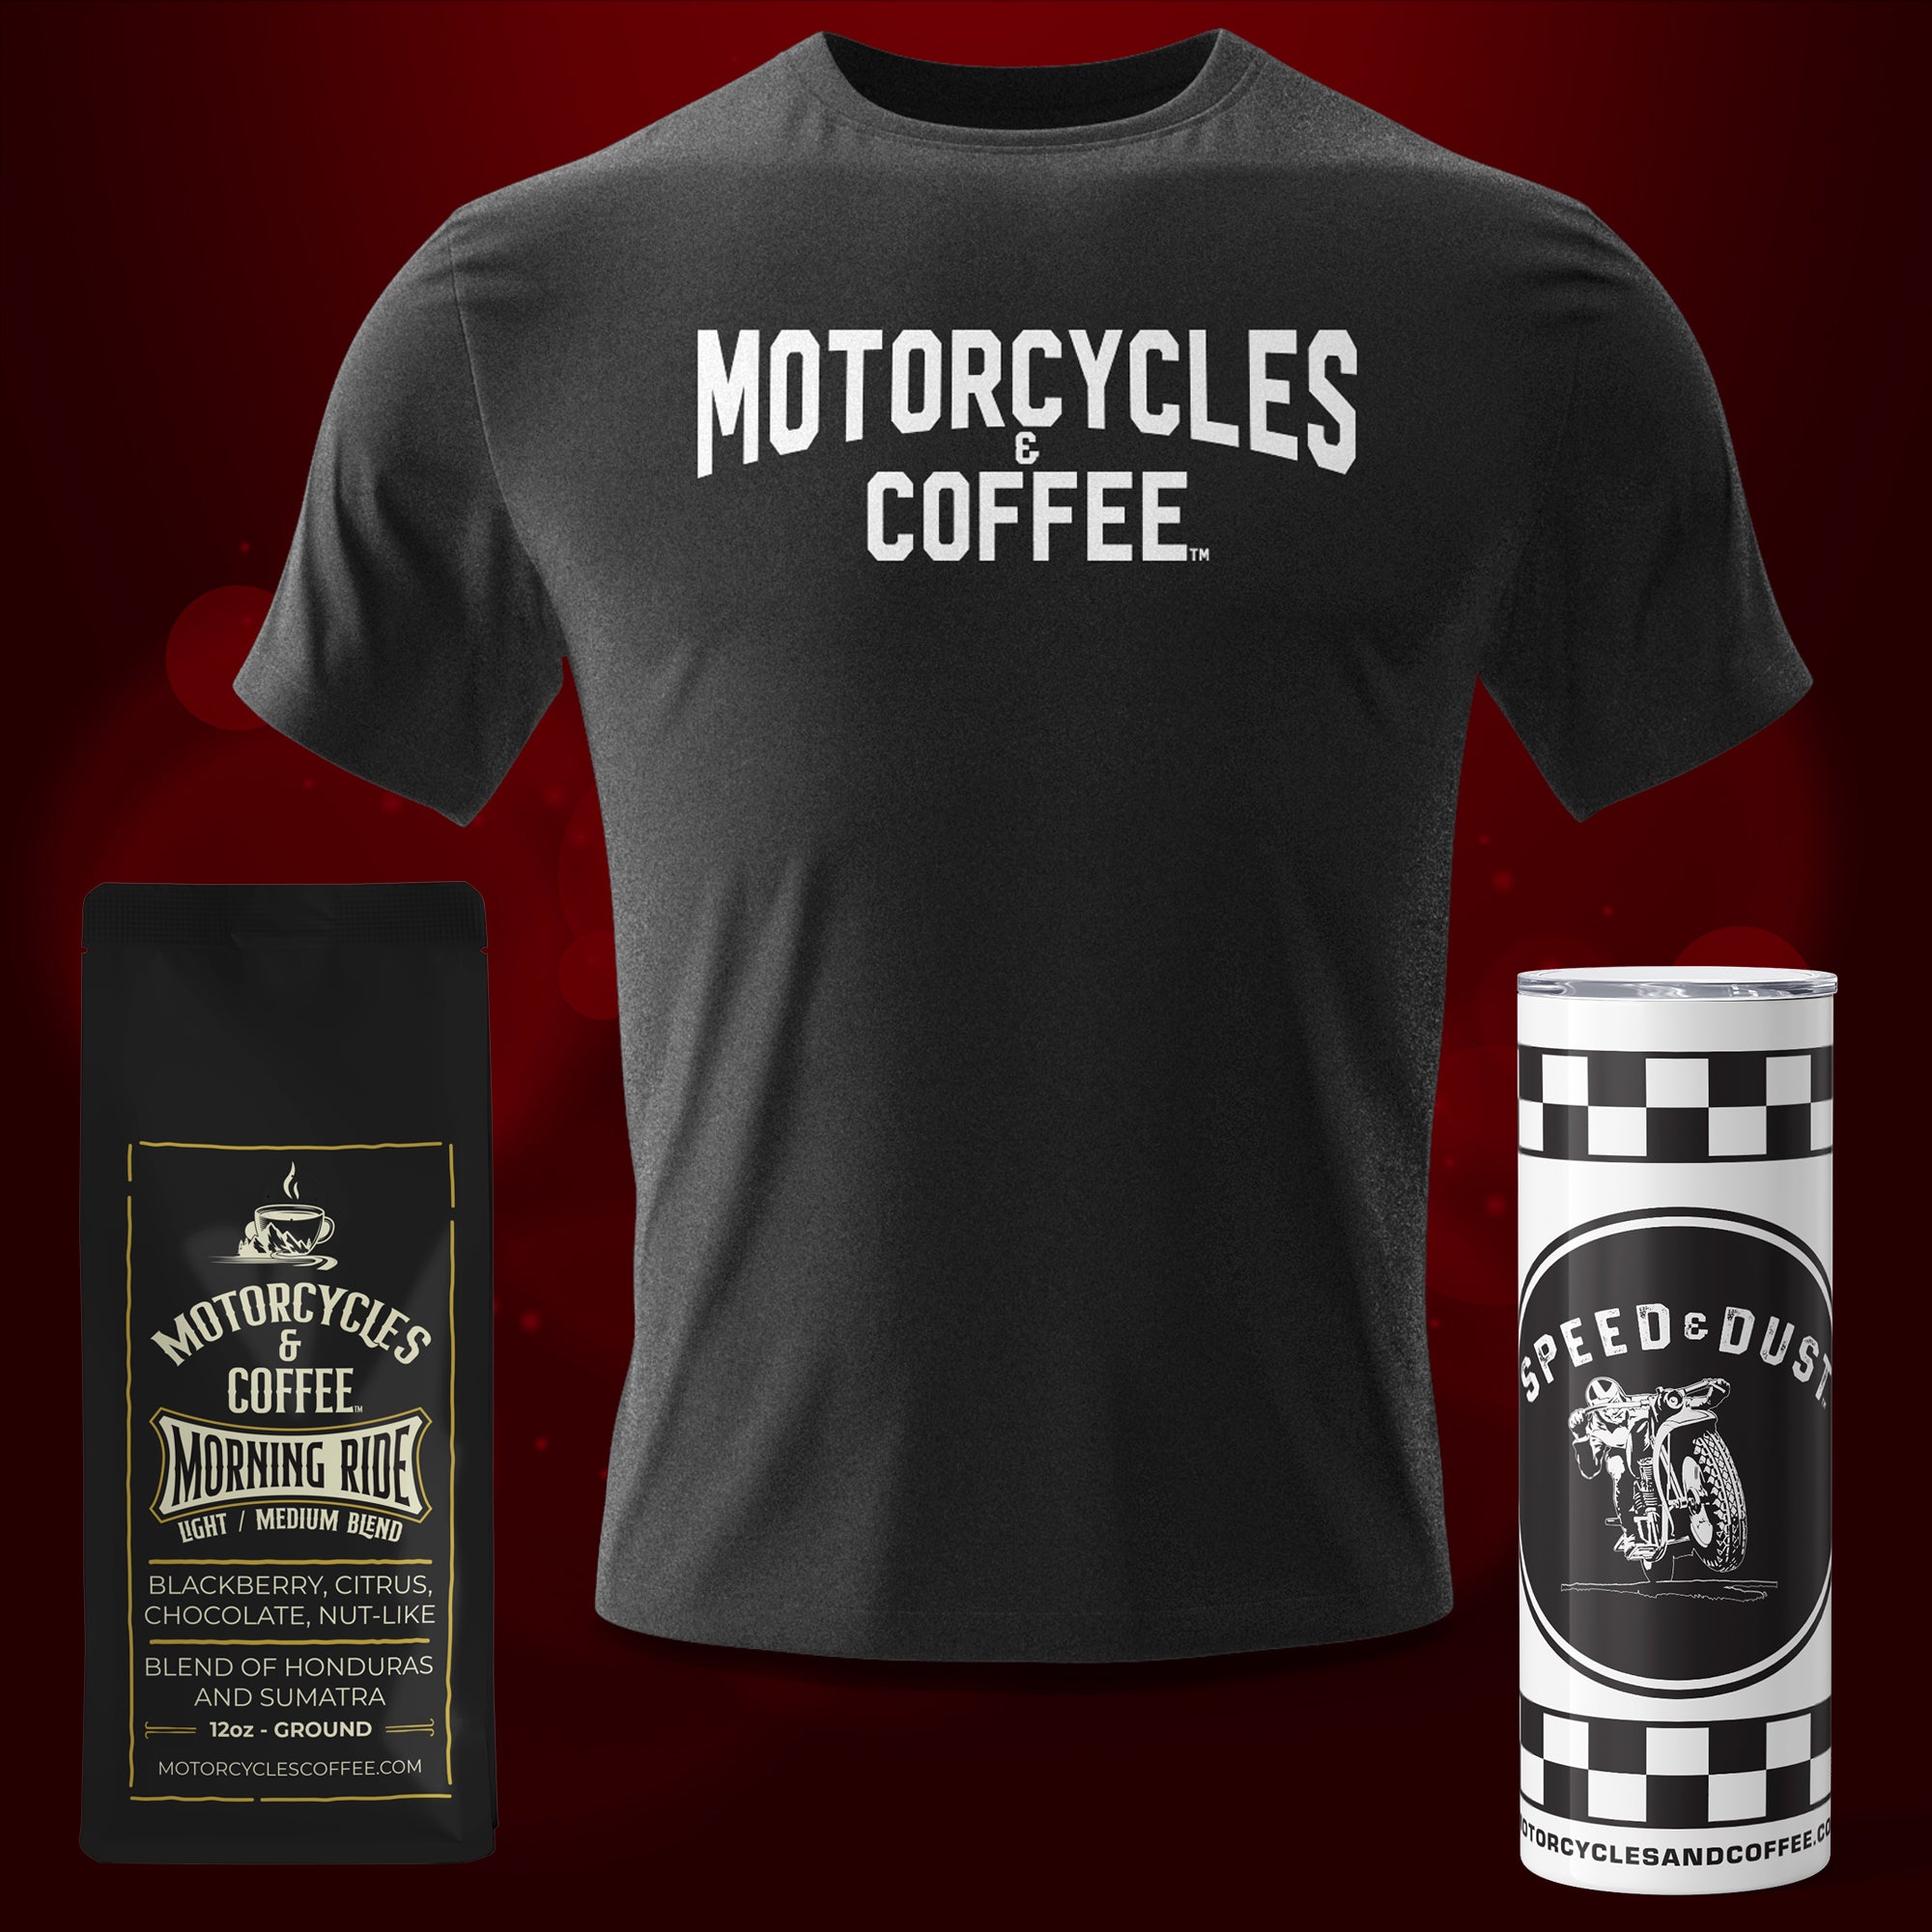 Motorcycles & Coffee Holiday Bundle